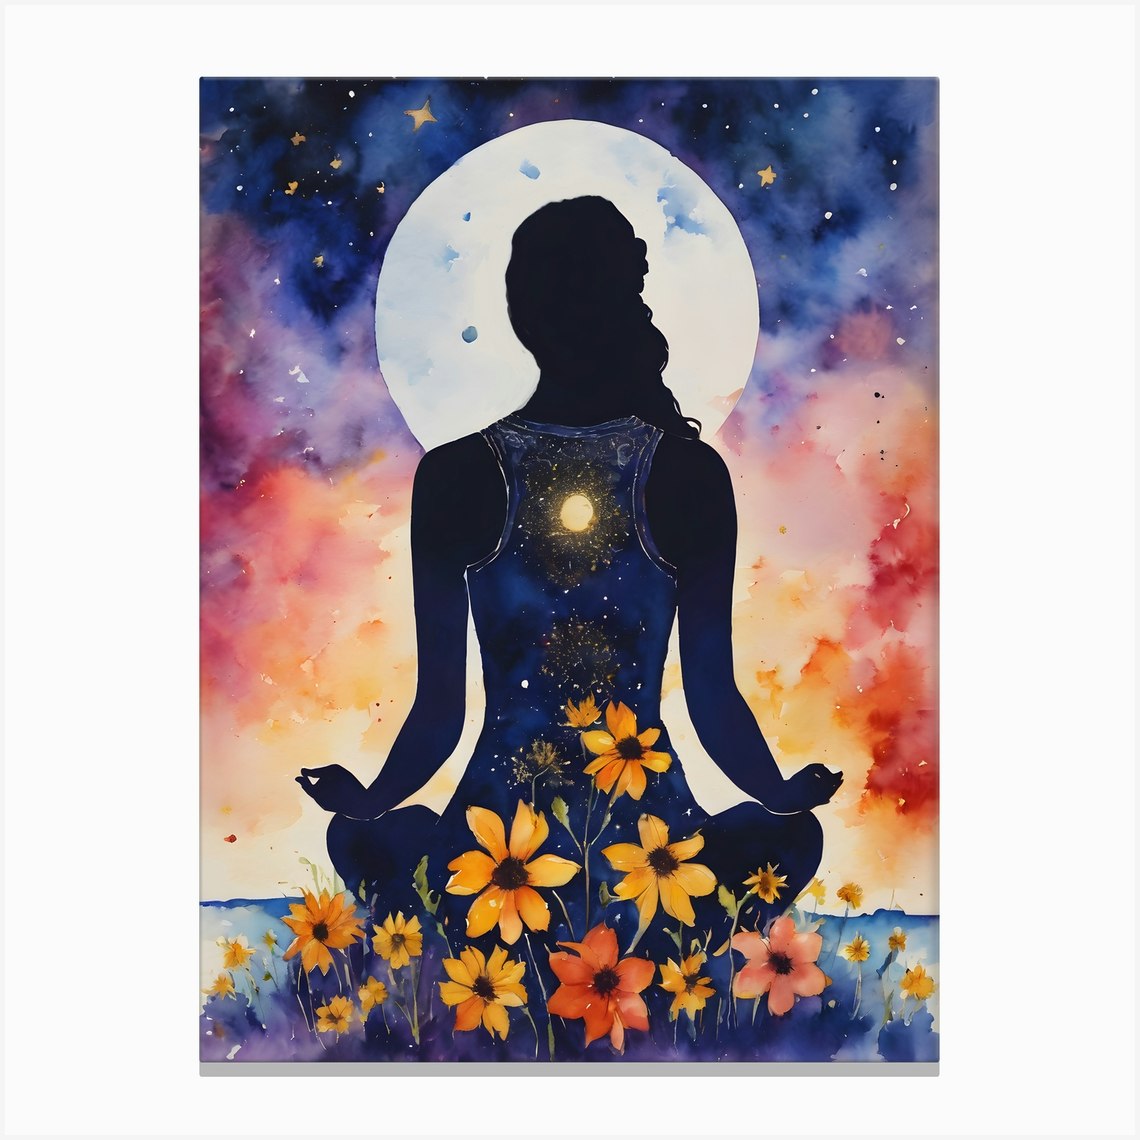 Meditative Woman In Yoga Pose - Full Moon Contemplating Serenity